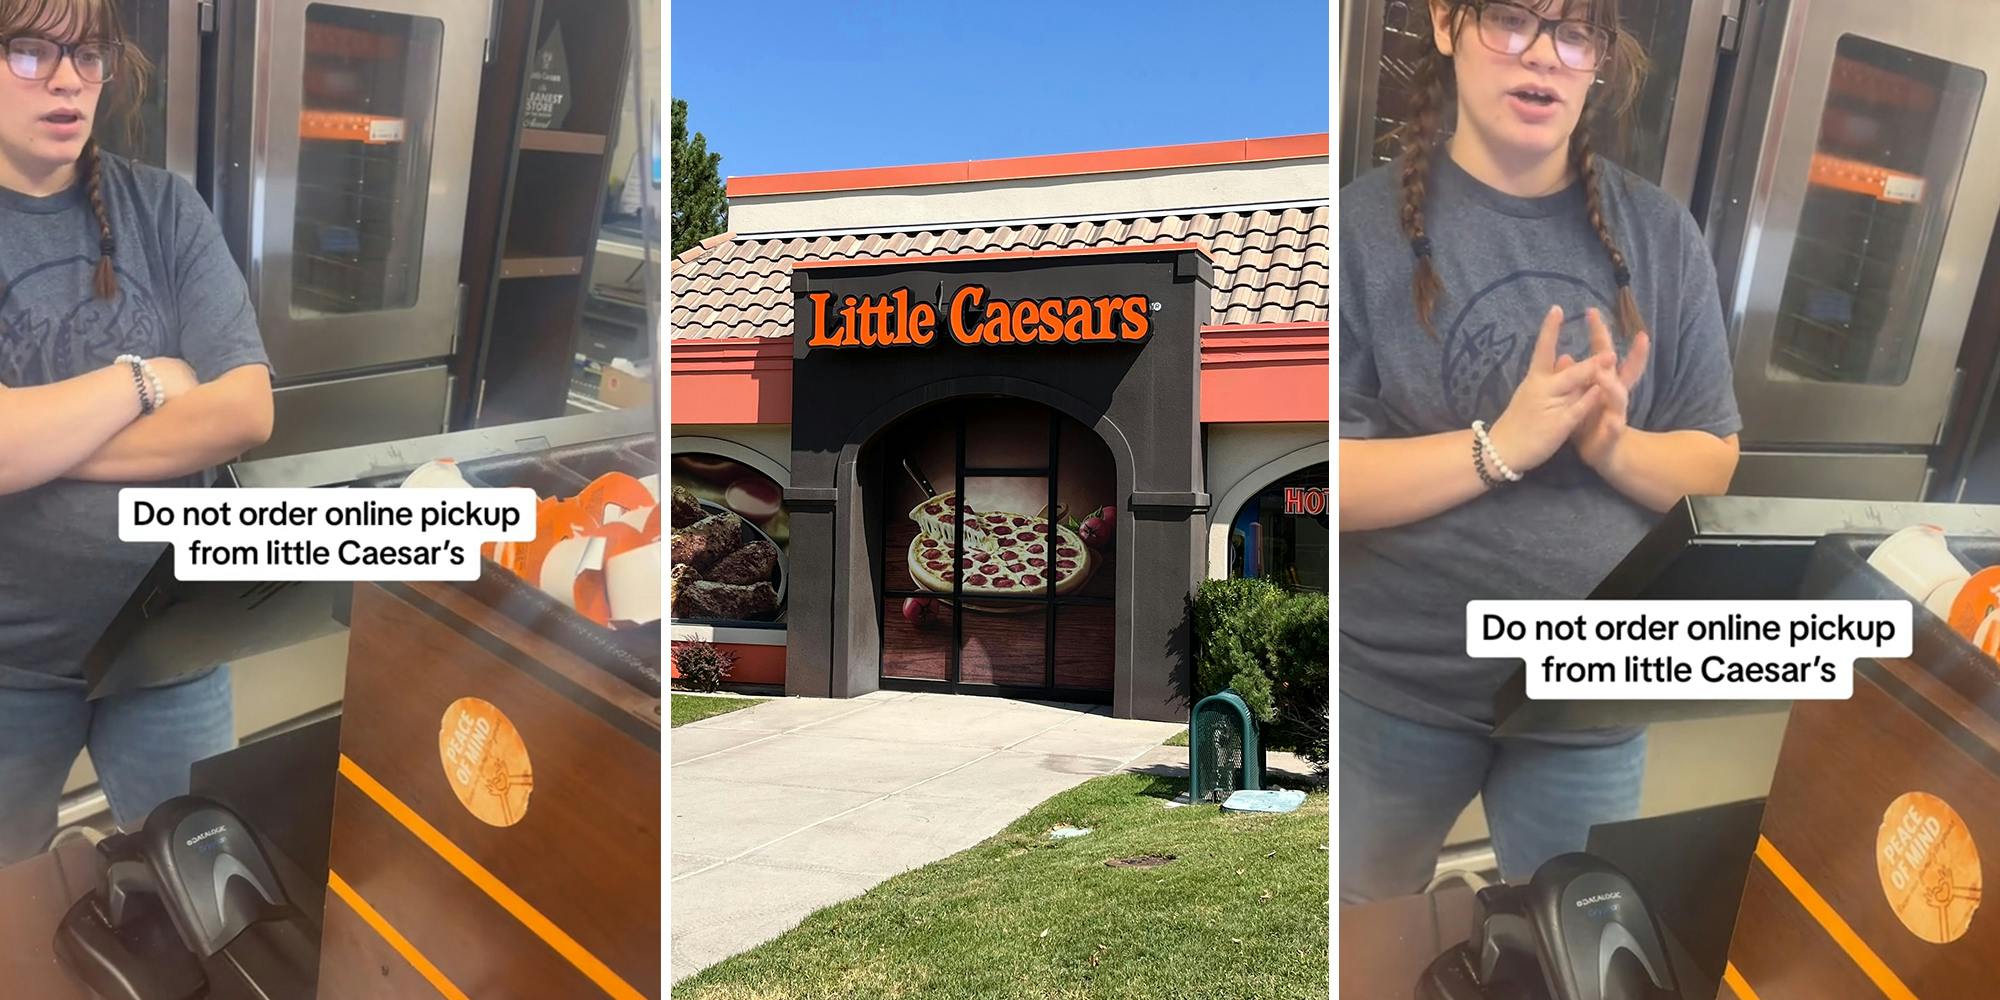 Little Caesars customer says someone else took her online pick-up order.